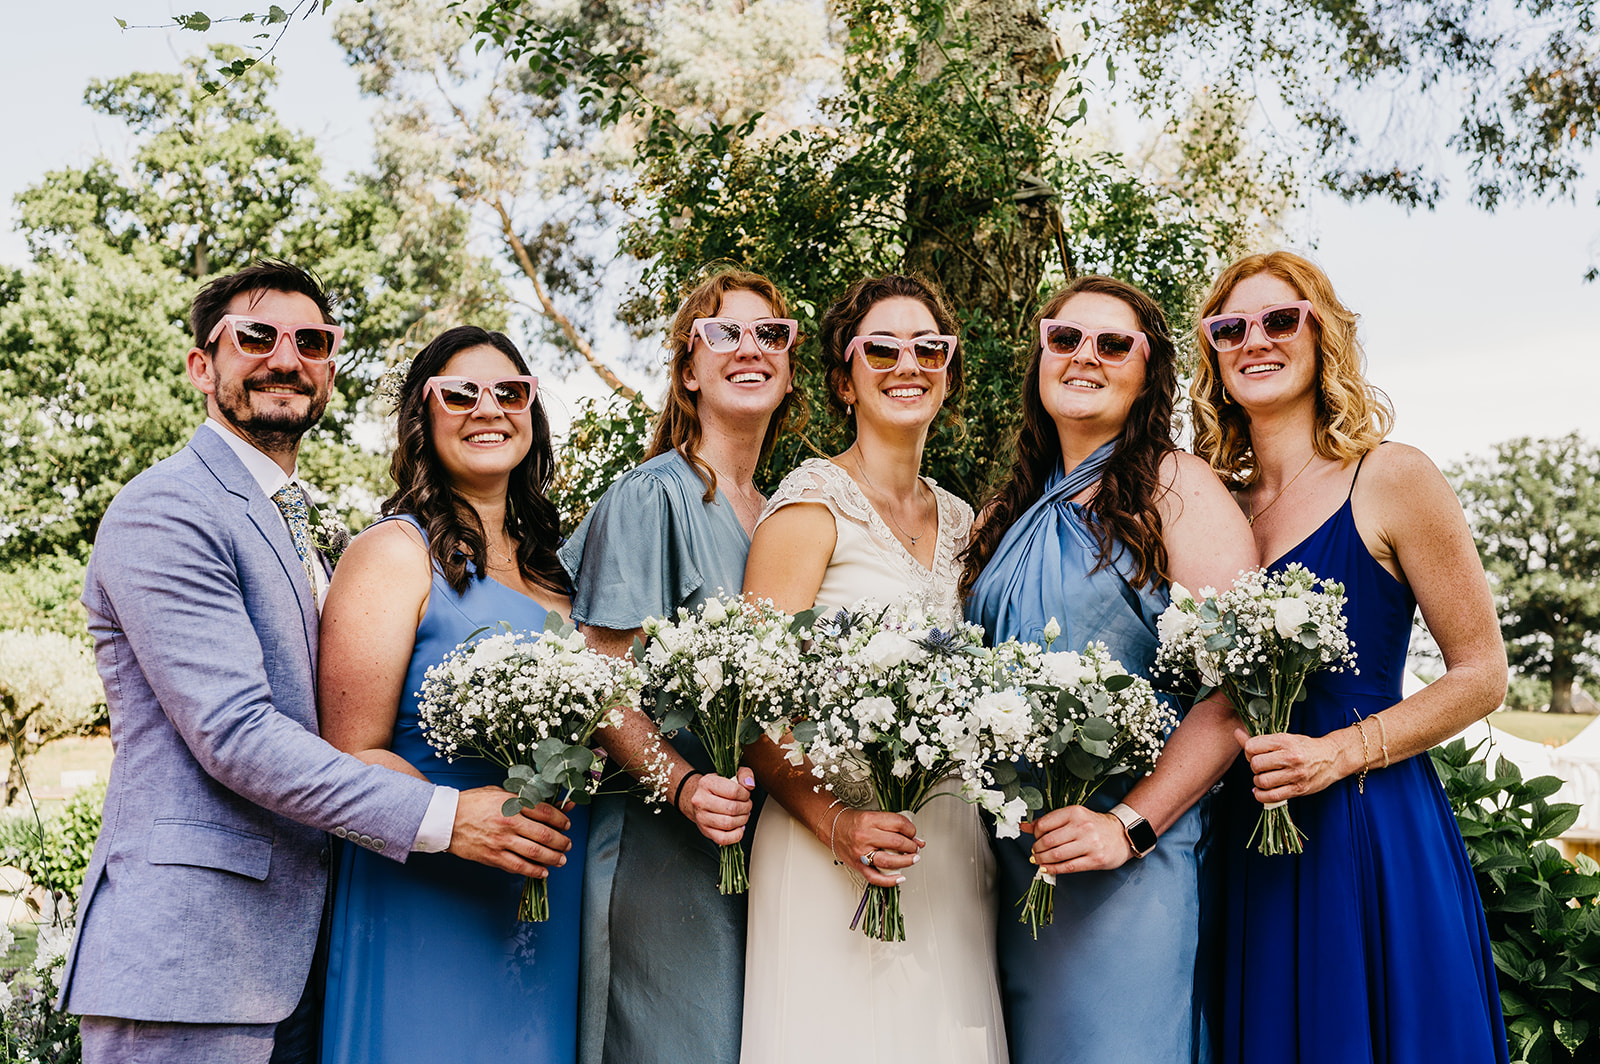 wedding group photo with sunglasses